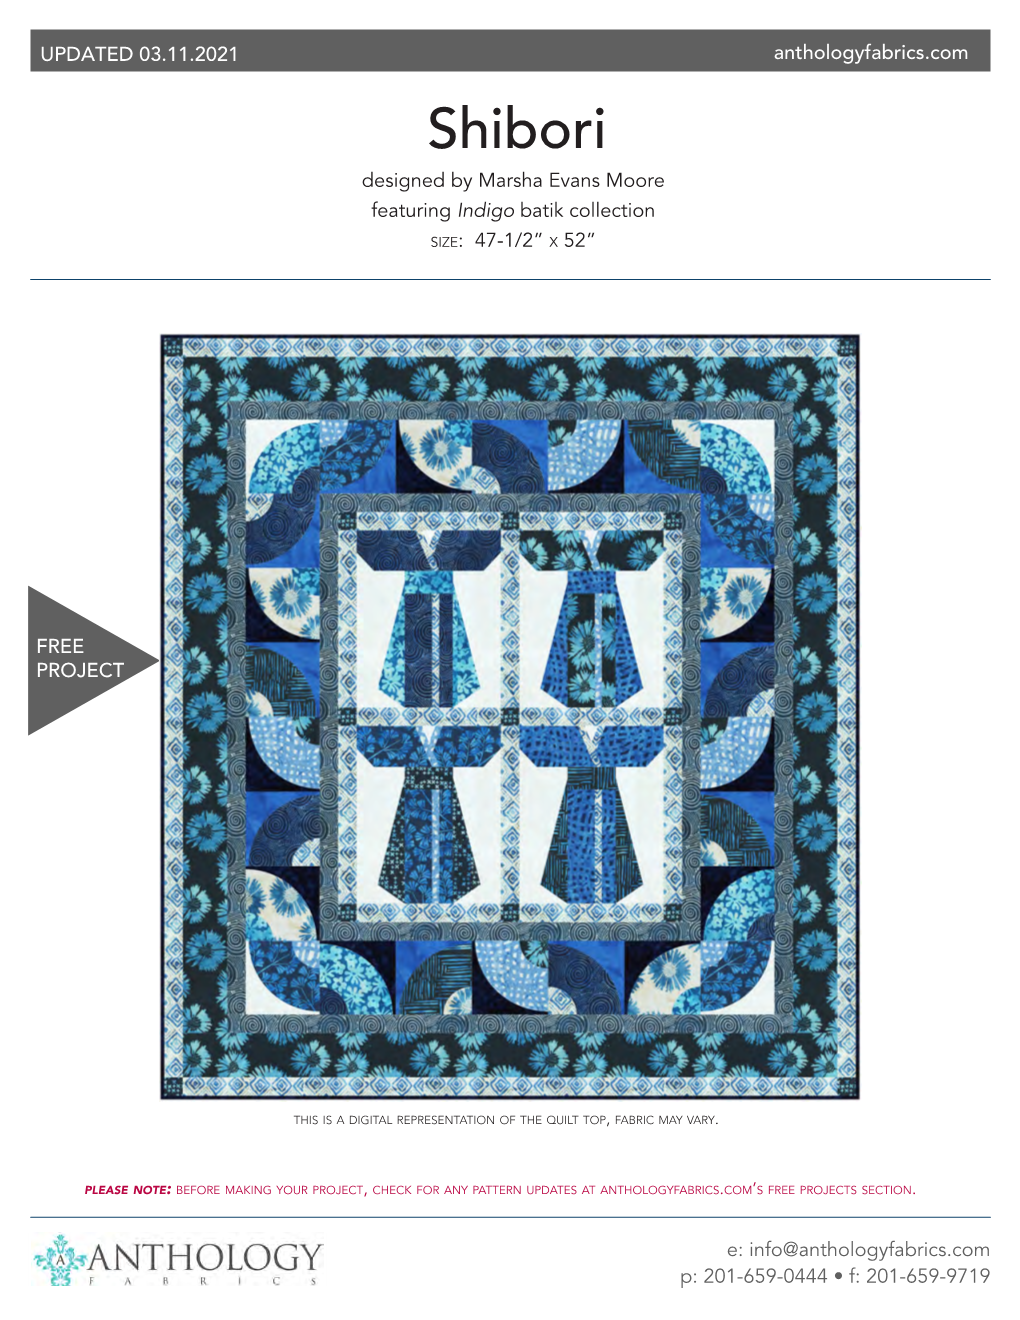 Shibori Designed by Marsha Evans Moore Featuring Indigo Batik Collection Size: 47-1/2” X 52”